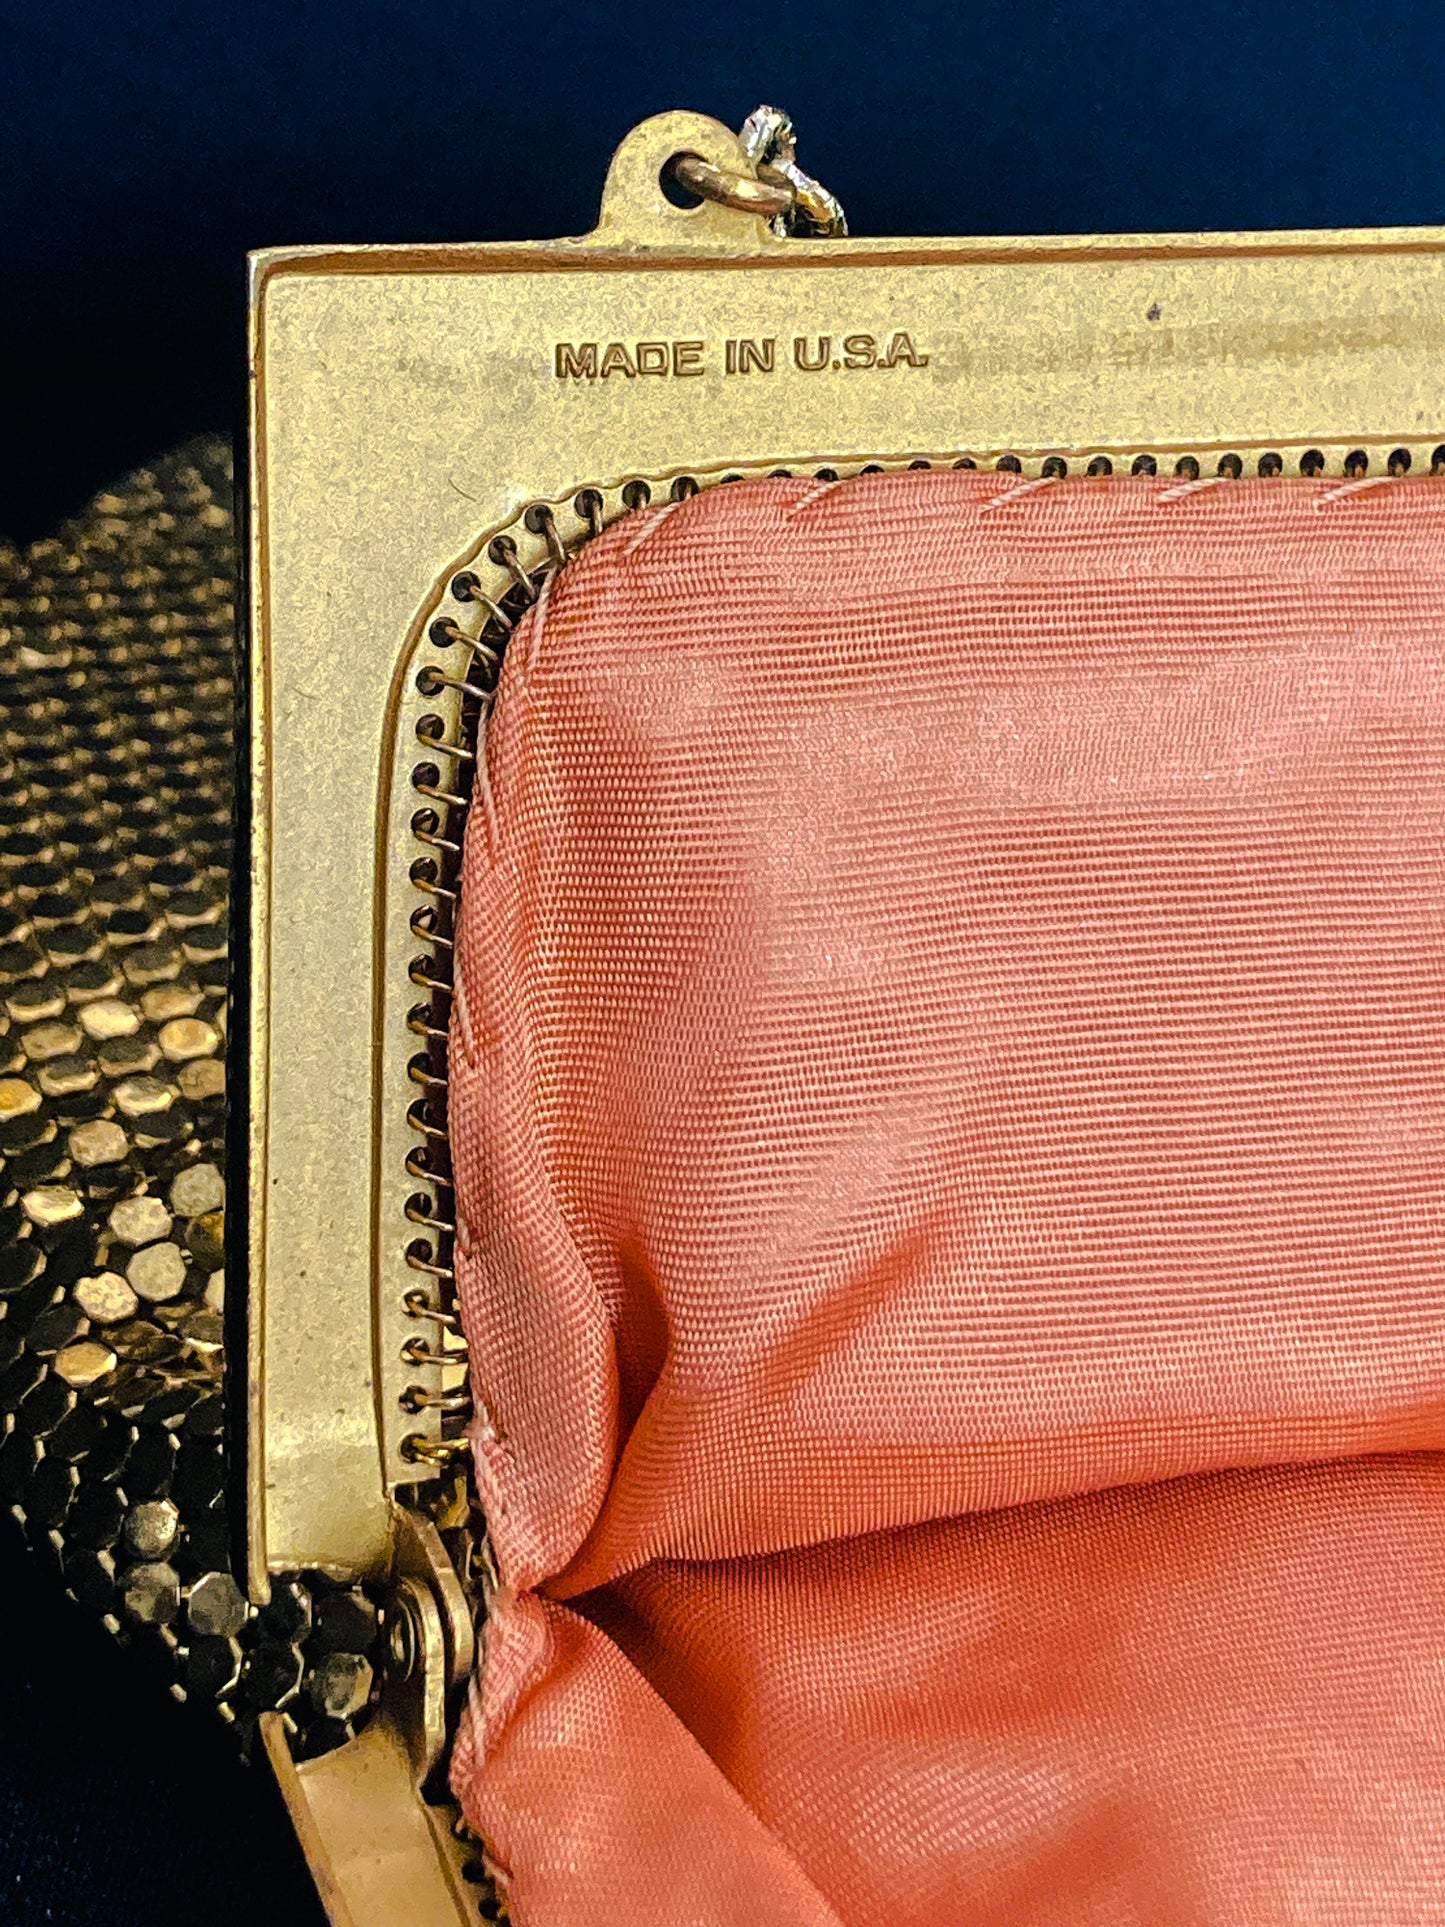 Dazzling Vintage Whiting & Davis Art Deco Style Gold Mesh Handbag Made in USA